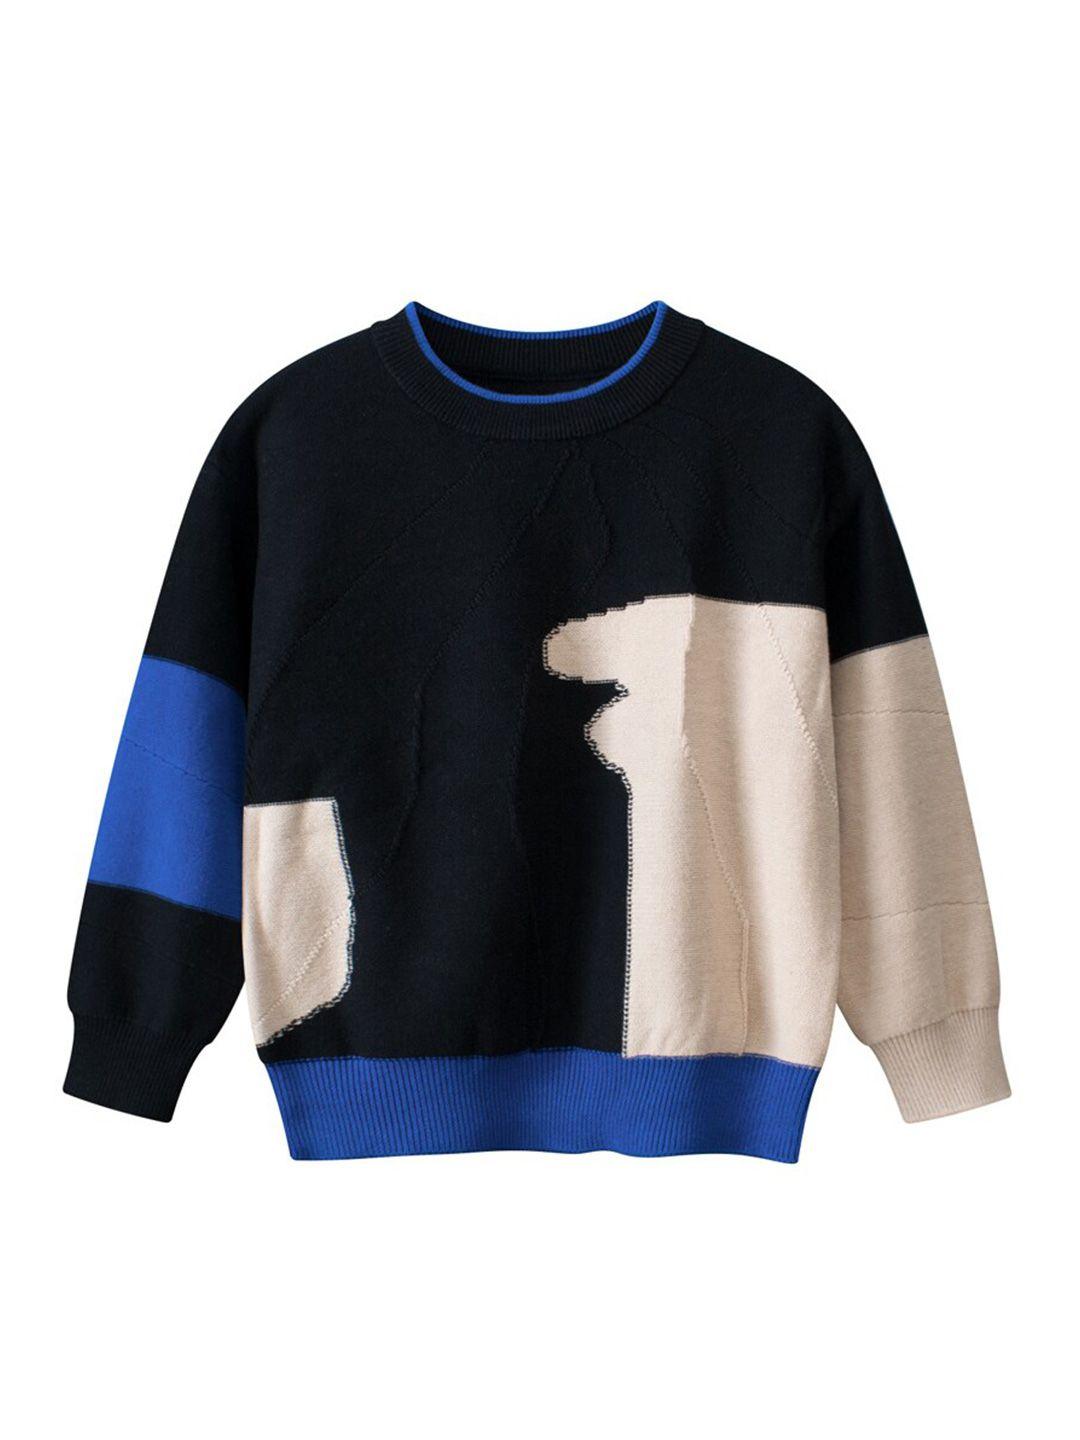 stylecast boys black & blue colourblocked cotton pullover sweater